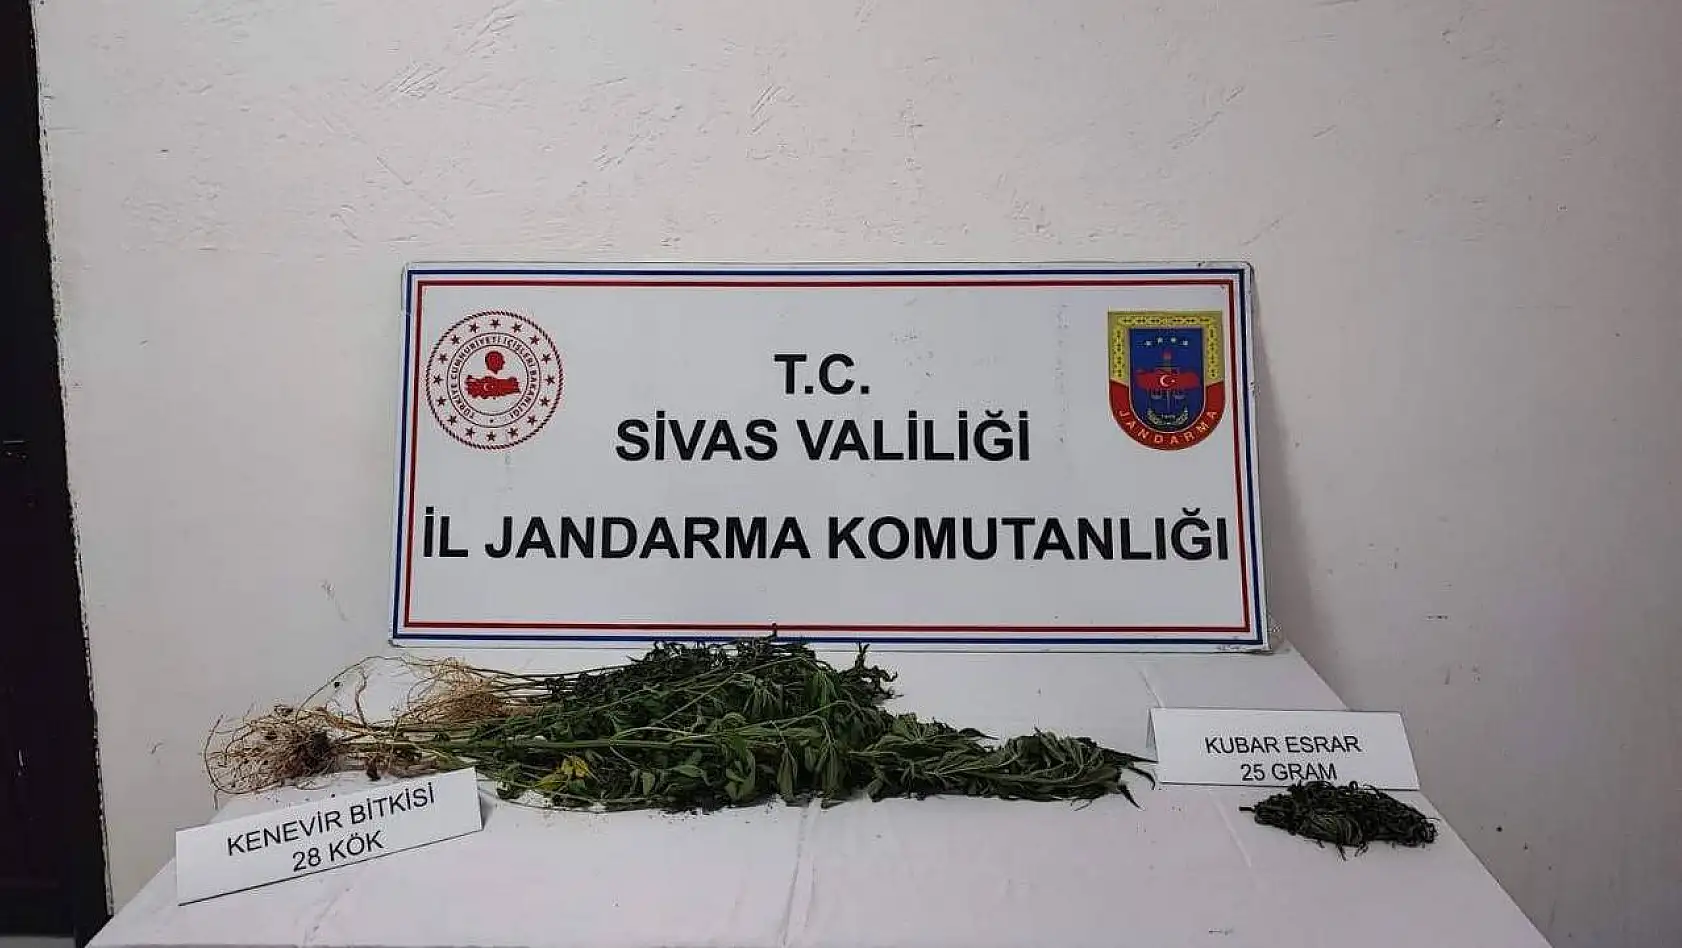 Sivas'ta 28 kök kenevir bitkisi geçirildi